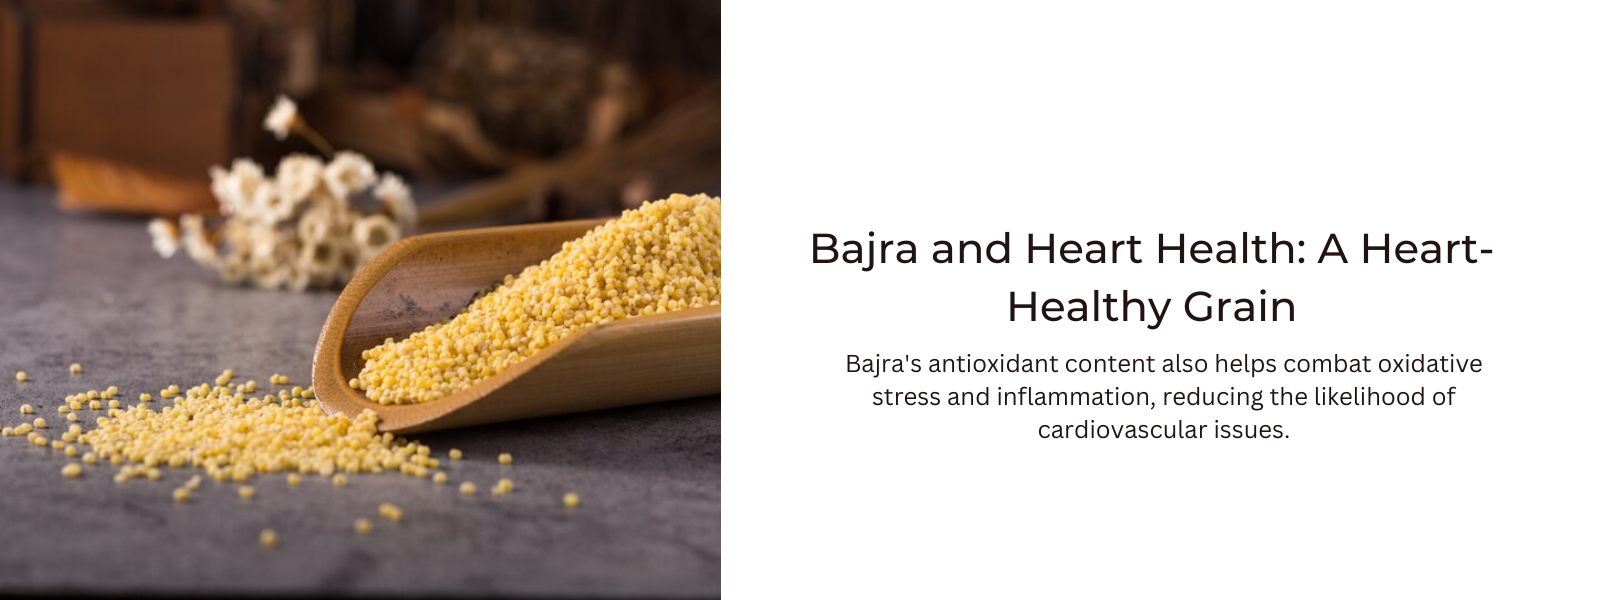 Bajra and Heart Health: A Heart-Healthy Grain